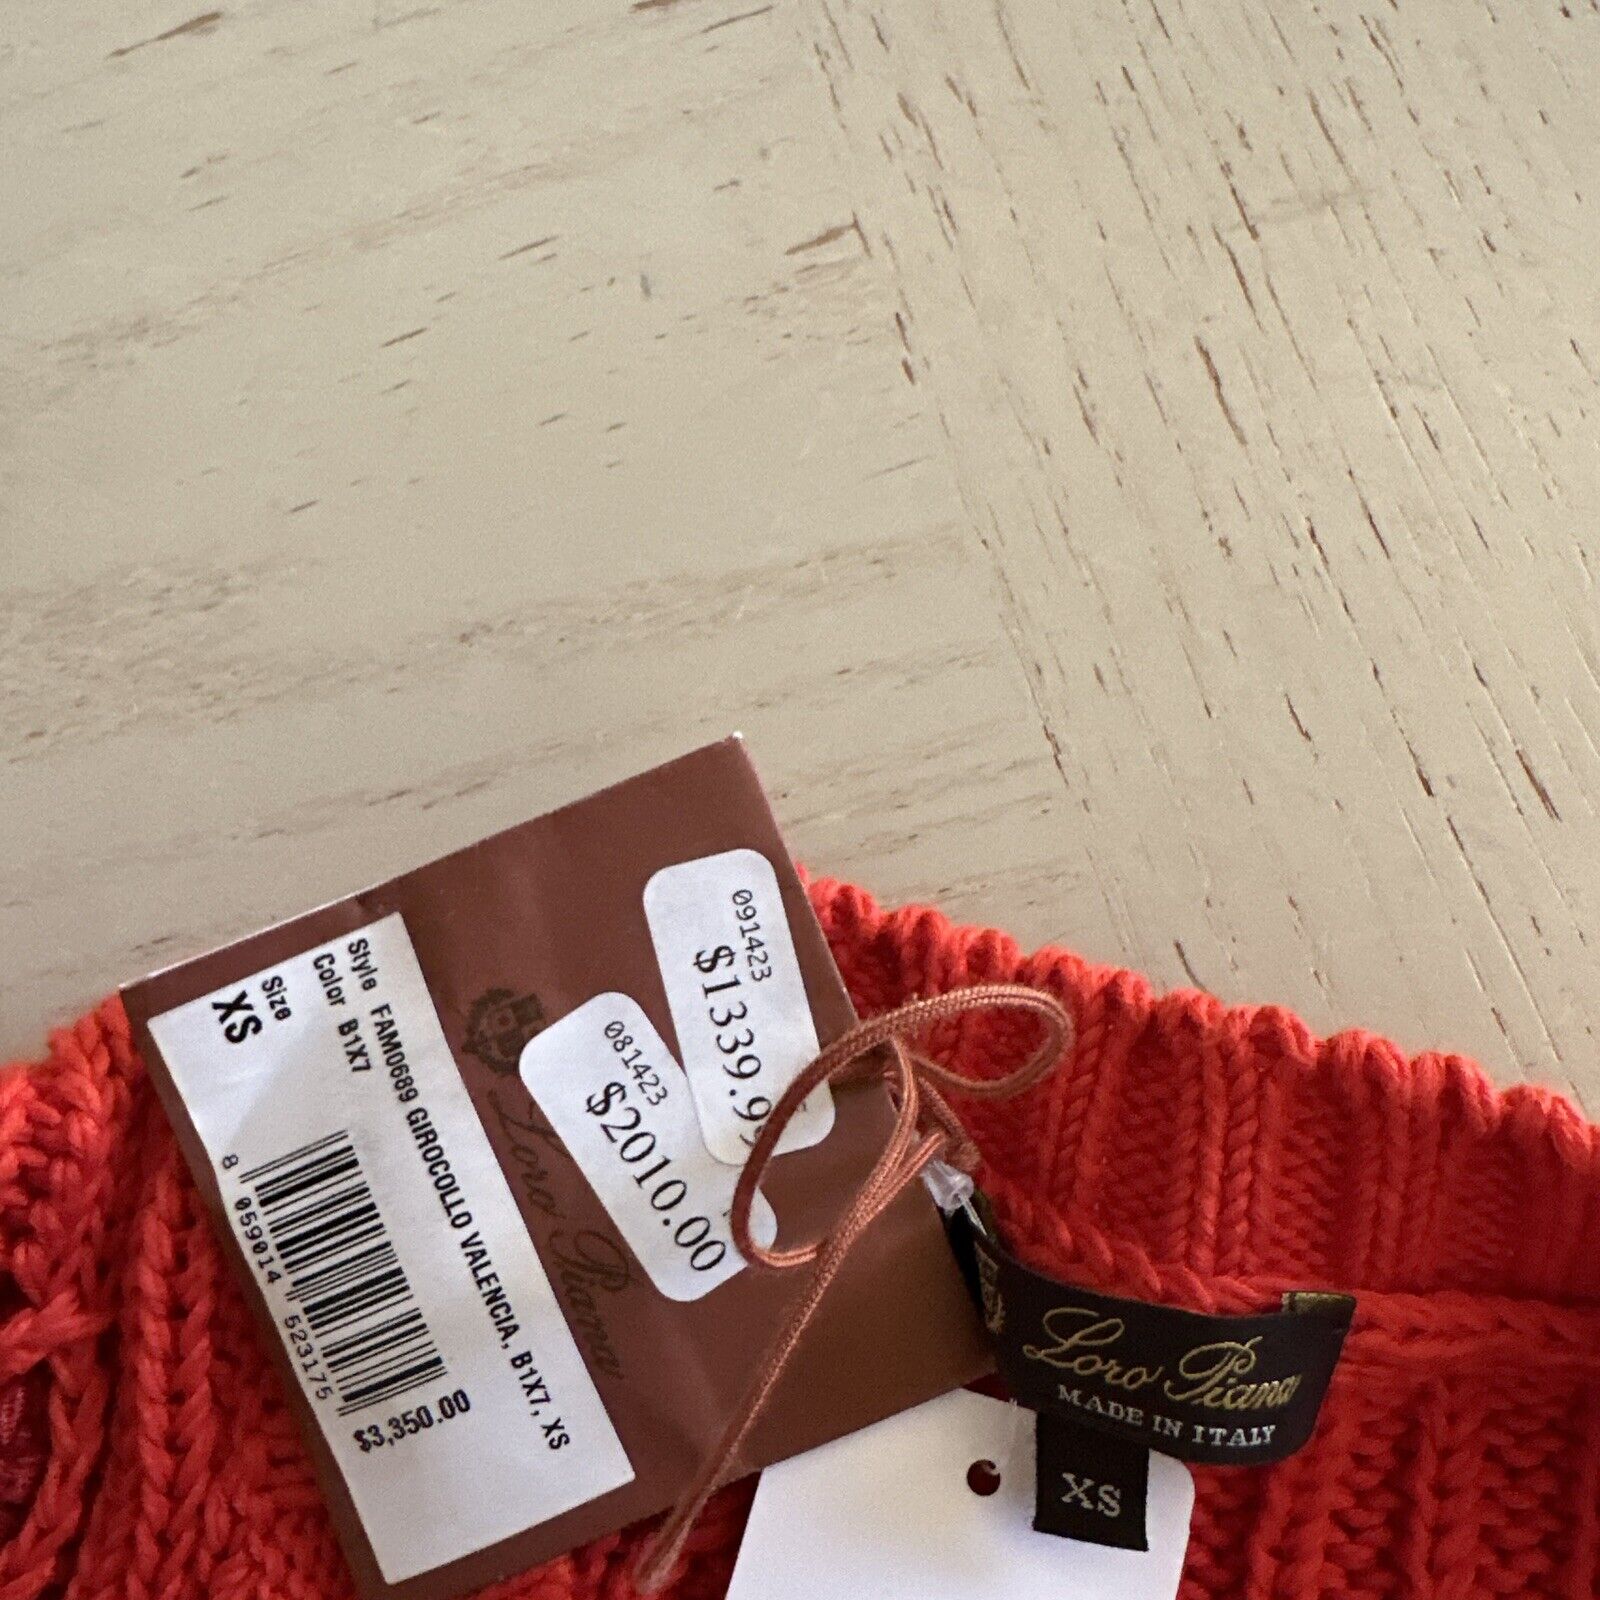 New $3350 Loro Piana Women Valencia Cabled Cotton Sweater Orange Size XS Italy